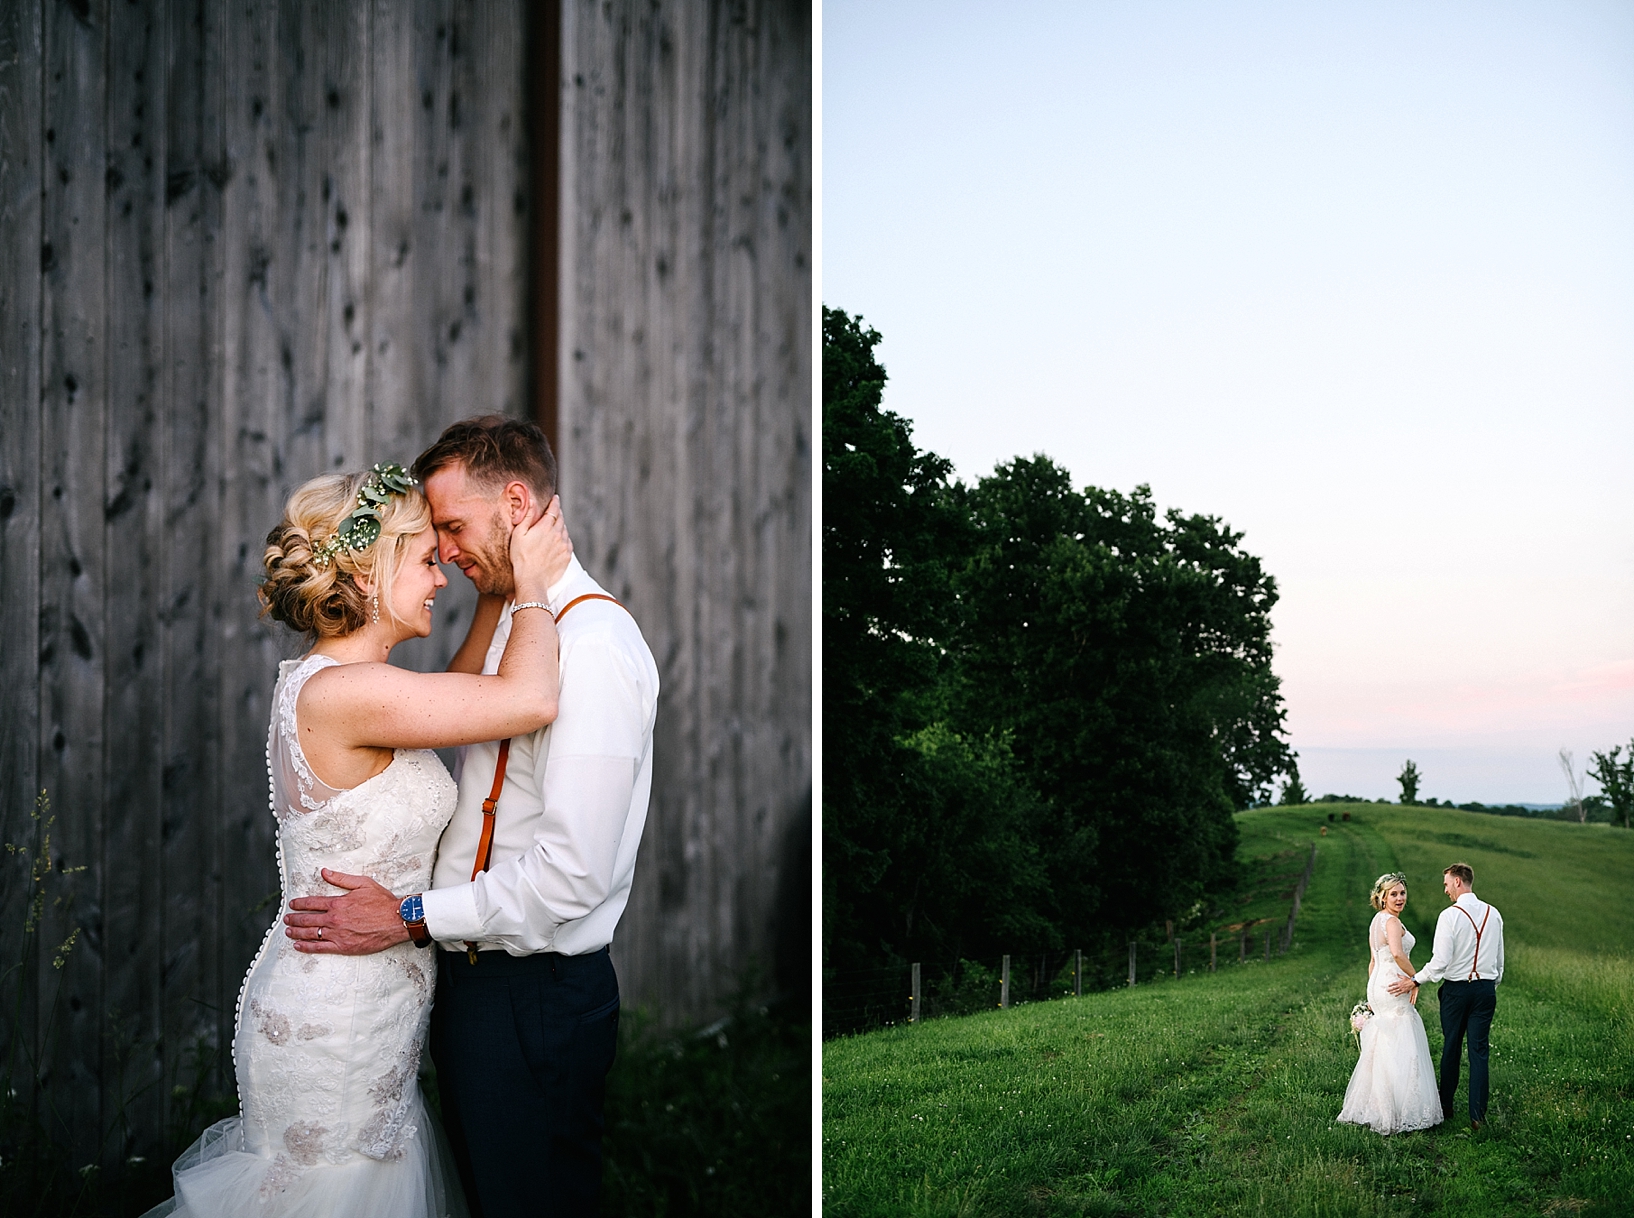 Rivercrest Farm Dover OH wedding photos